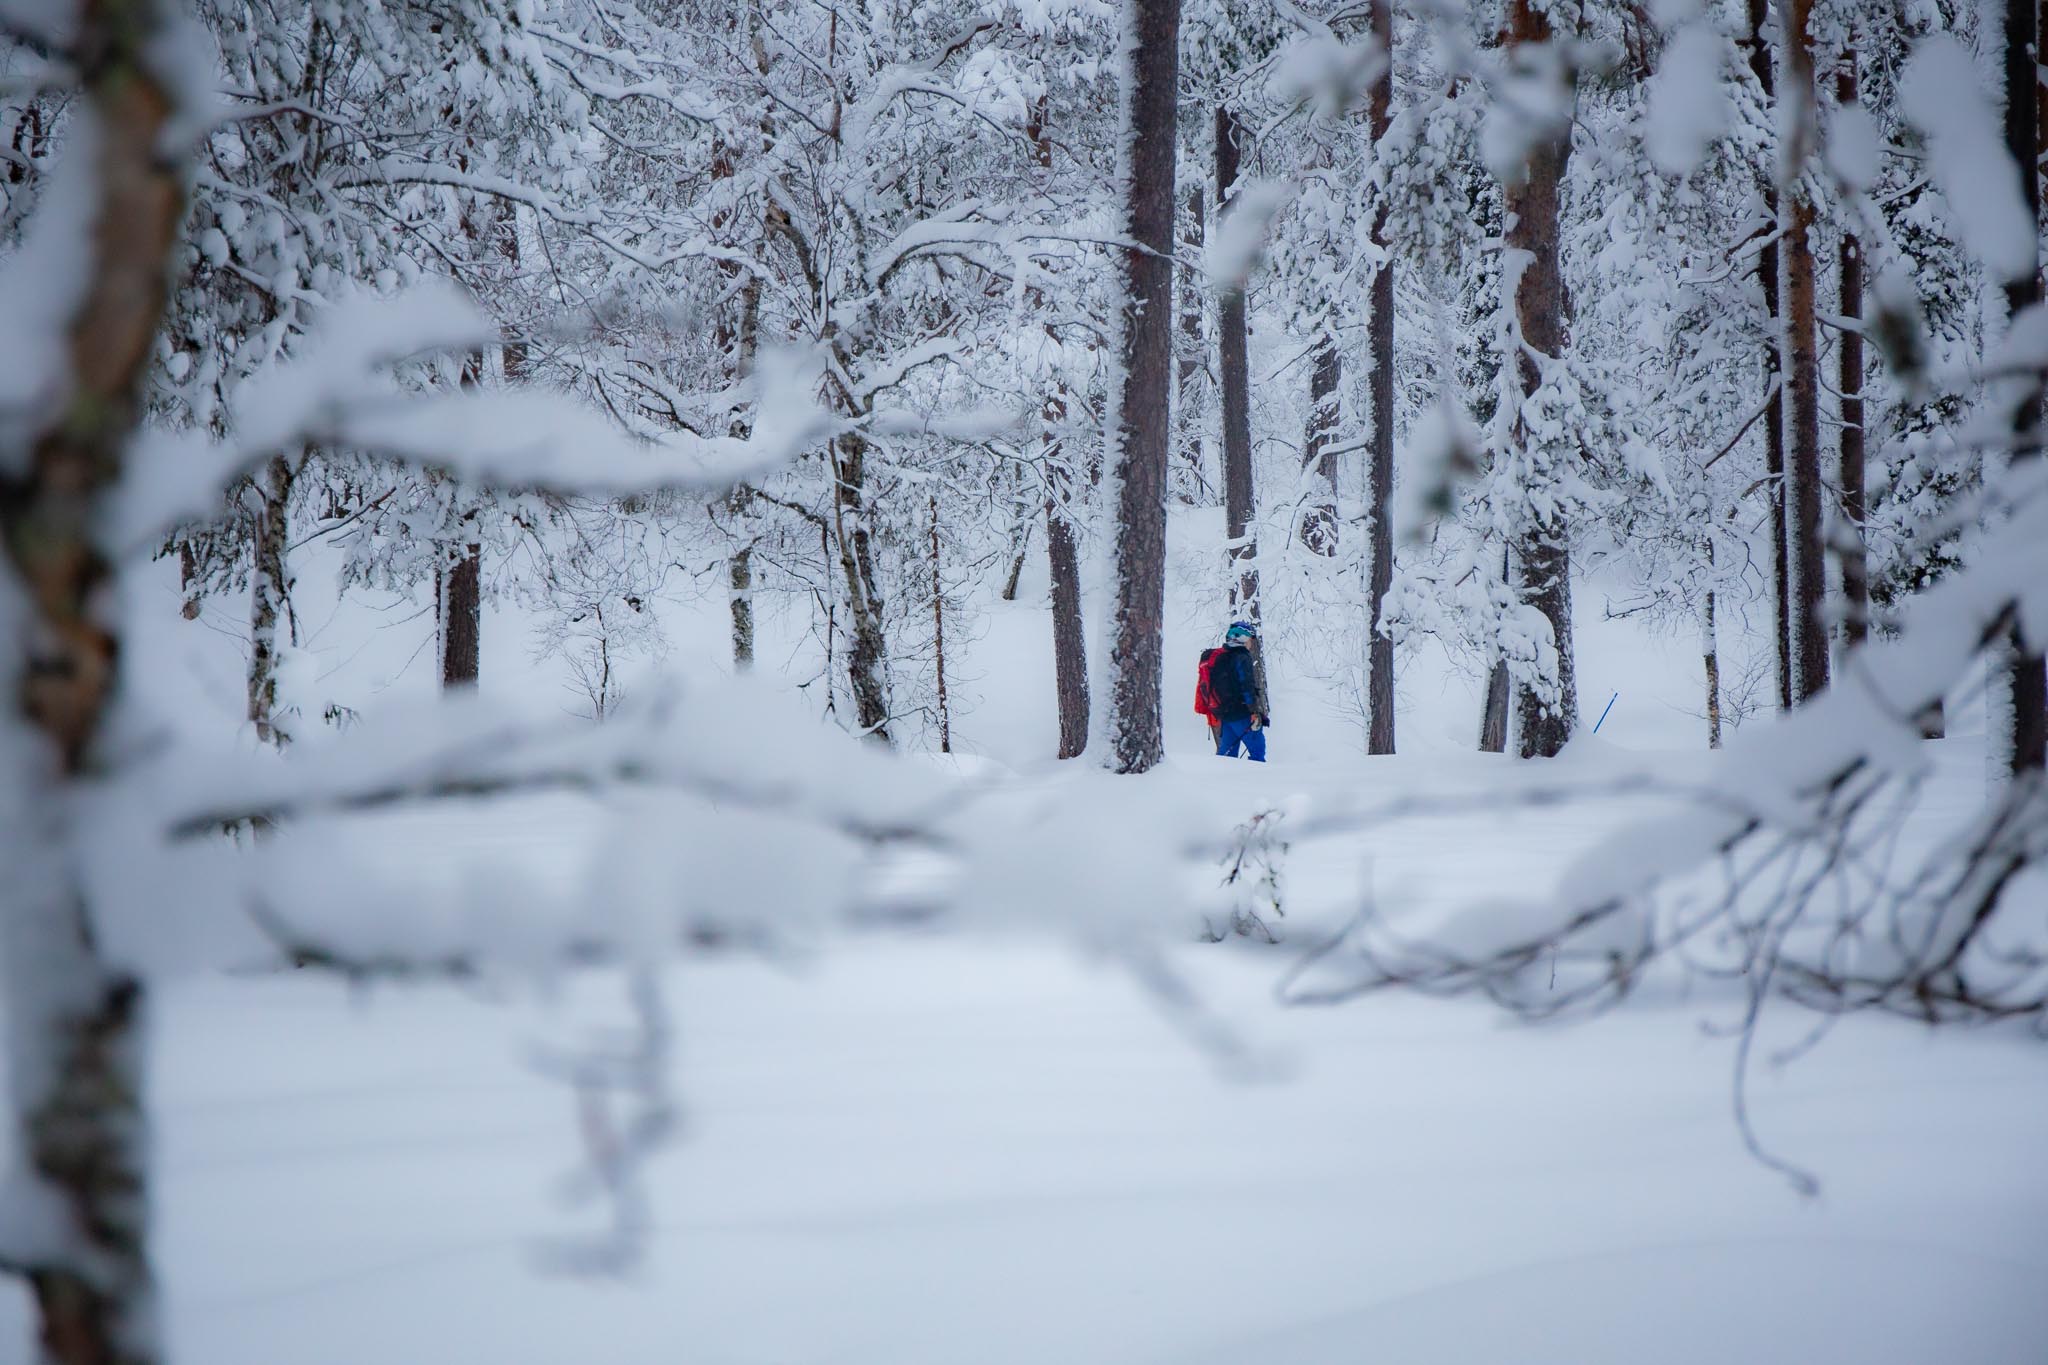 Christmas outdoor in Lapland Finland- Sodankylä- Visit Lapland- Pic by Jasim Sarker